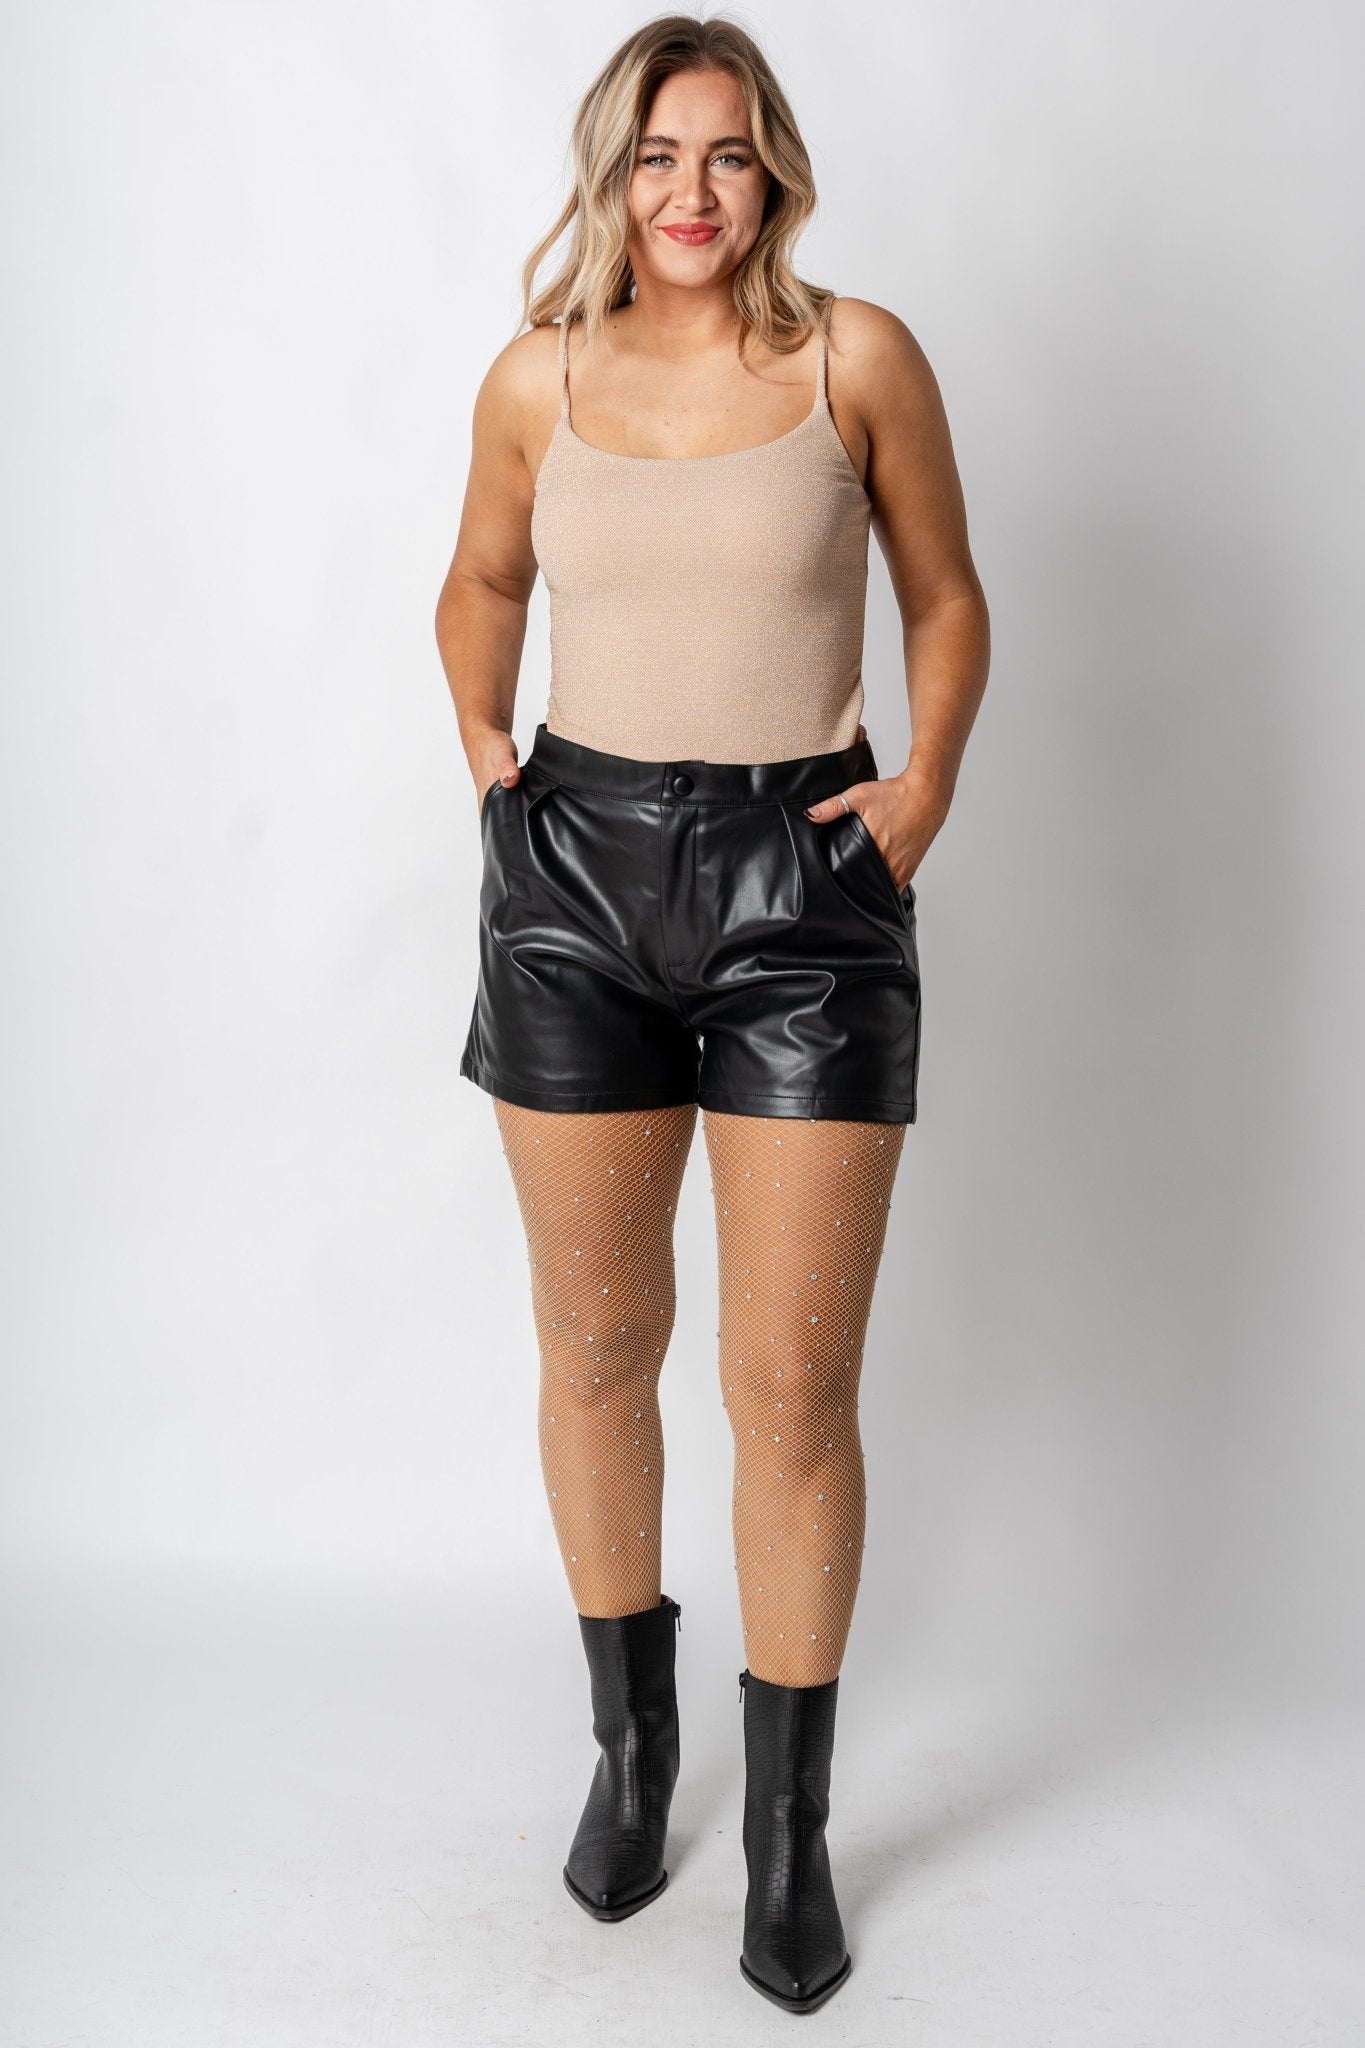 Rhinestone fishnet pantyhose nude  Trendy Pants - Lush Fashion Lounge